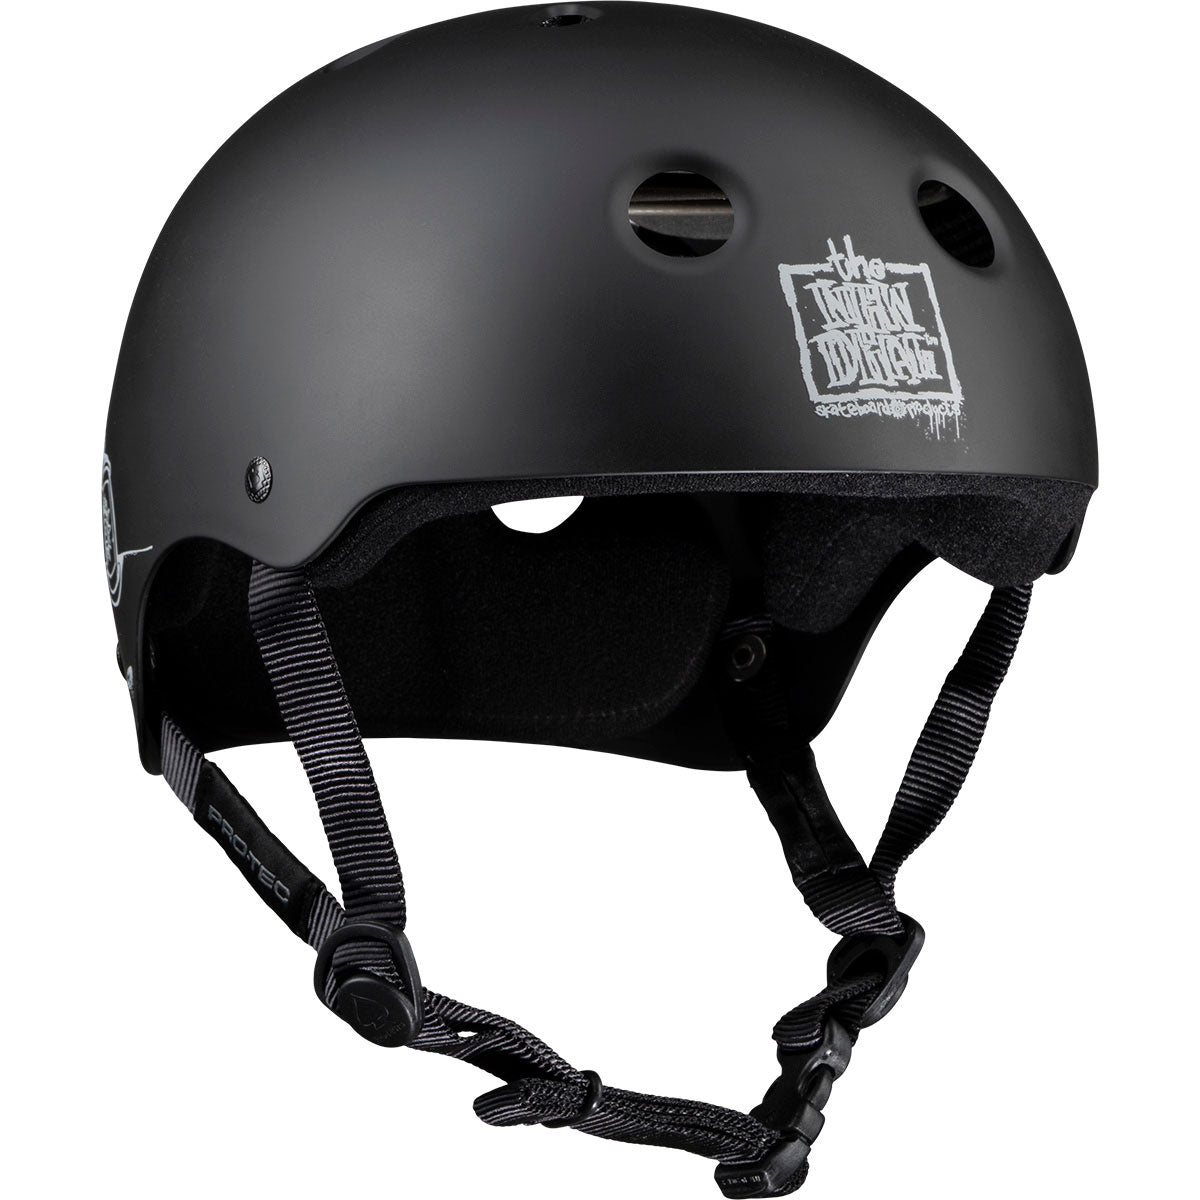 Pro Tec x New Deal Spray Helmet - Black image 4